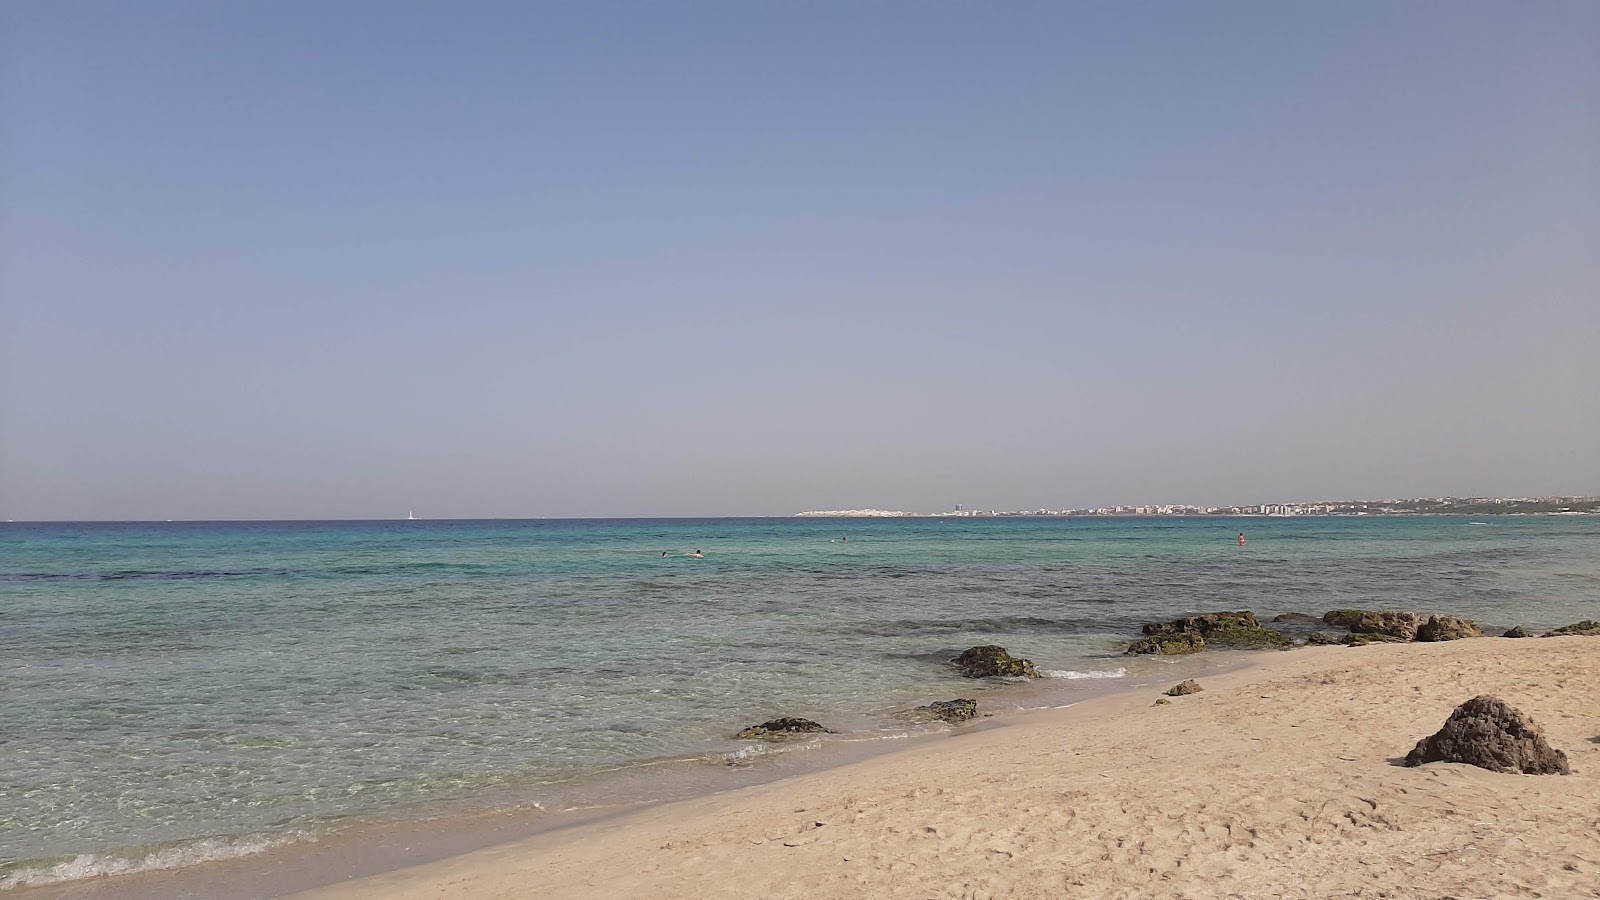 Foto von Spiaggia degli Innamorati mit türkisfarbenes wasser Oberfläche